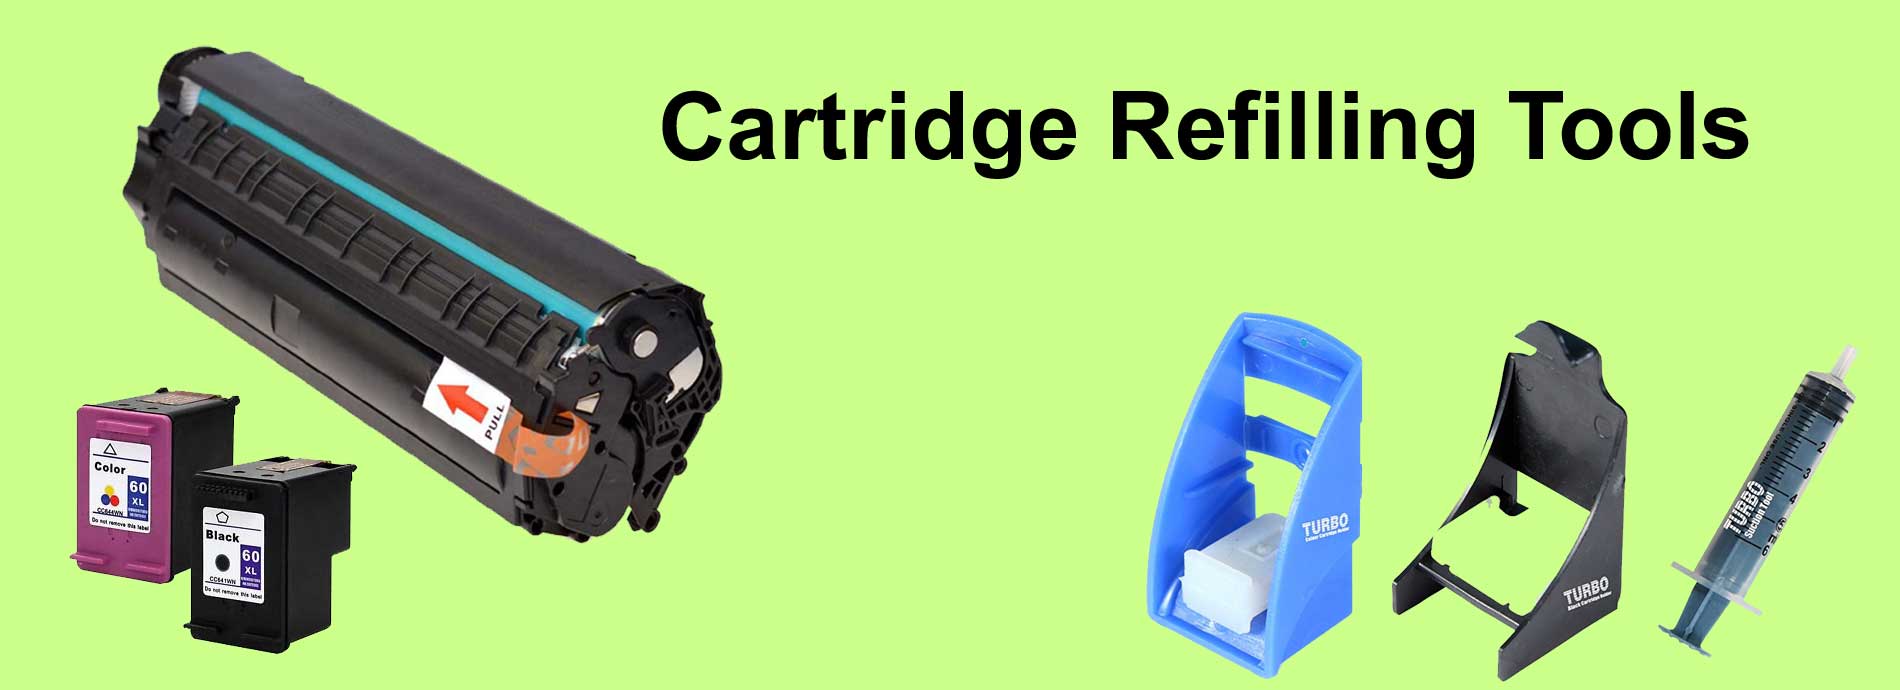 cartridge refilling tools